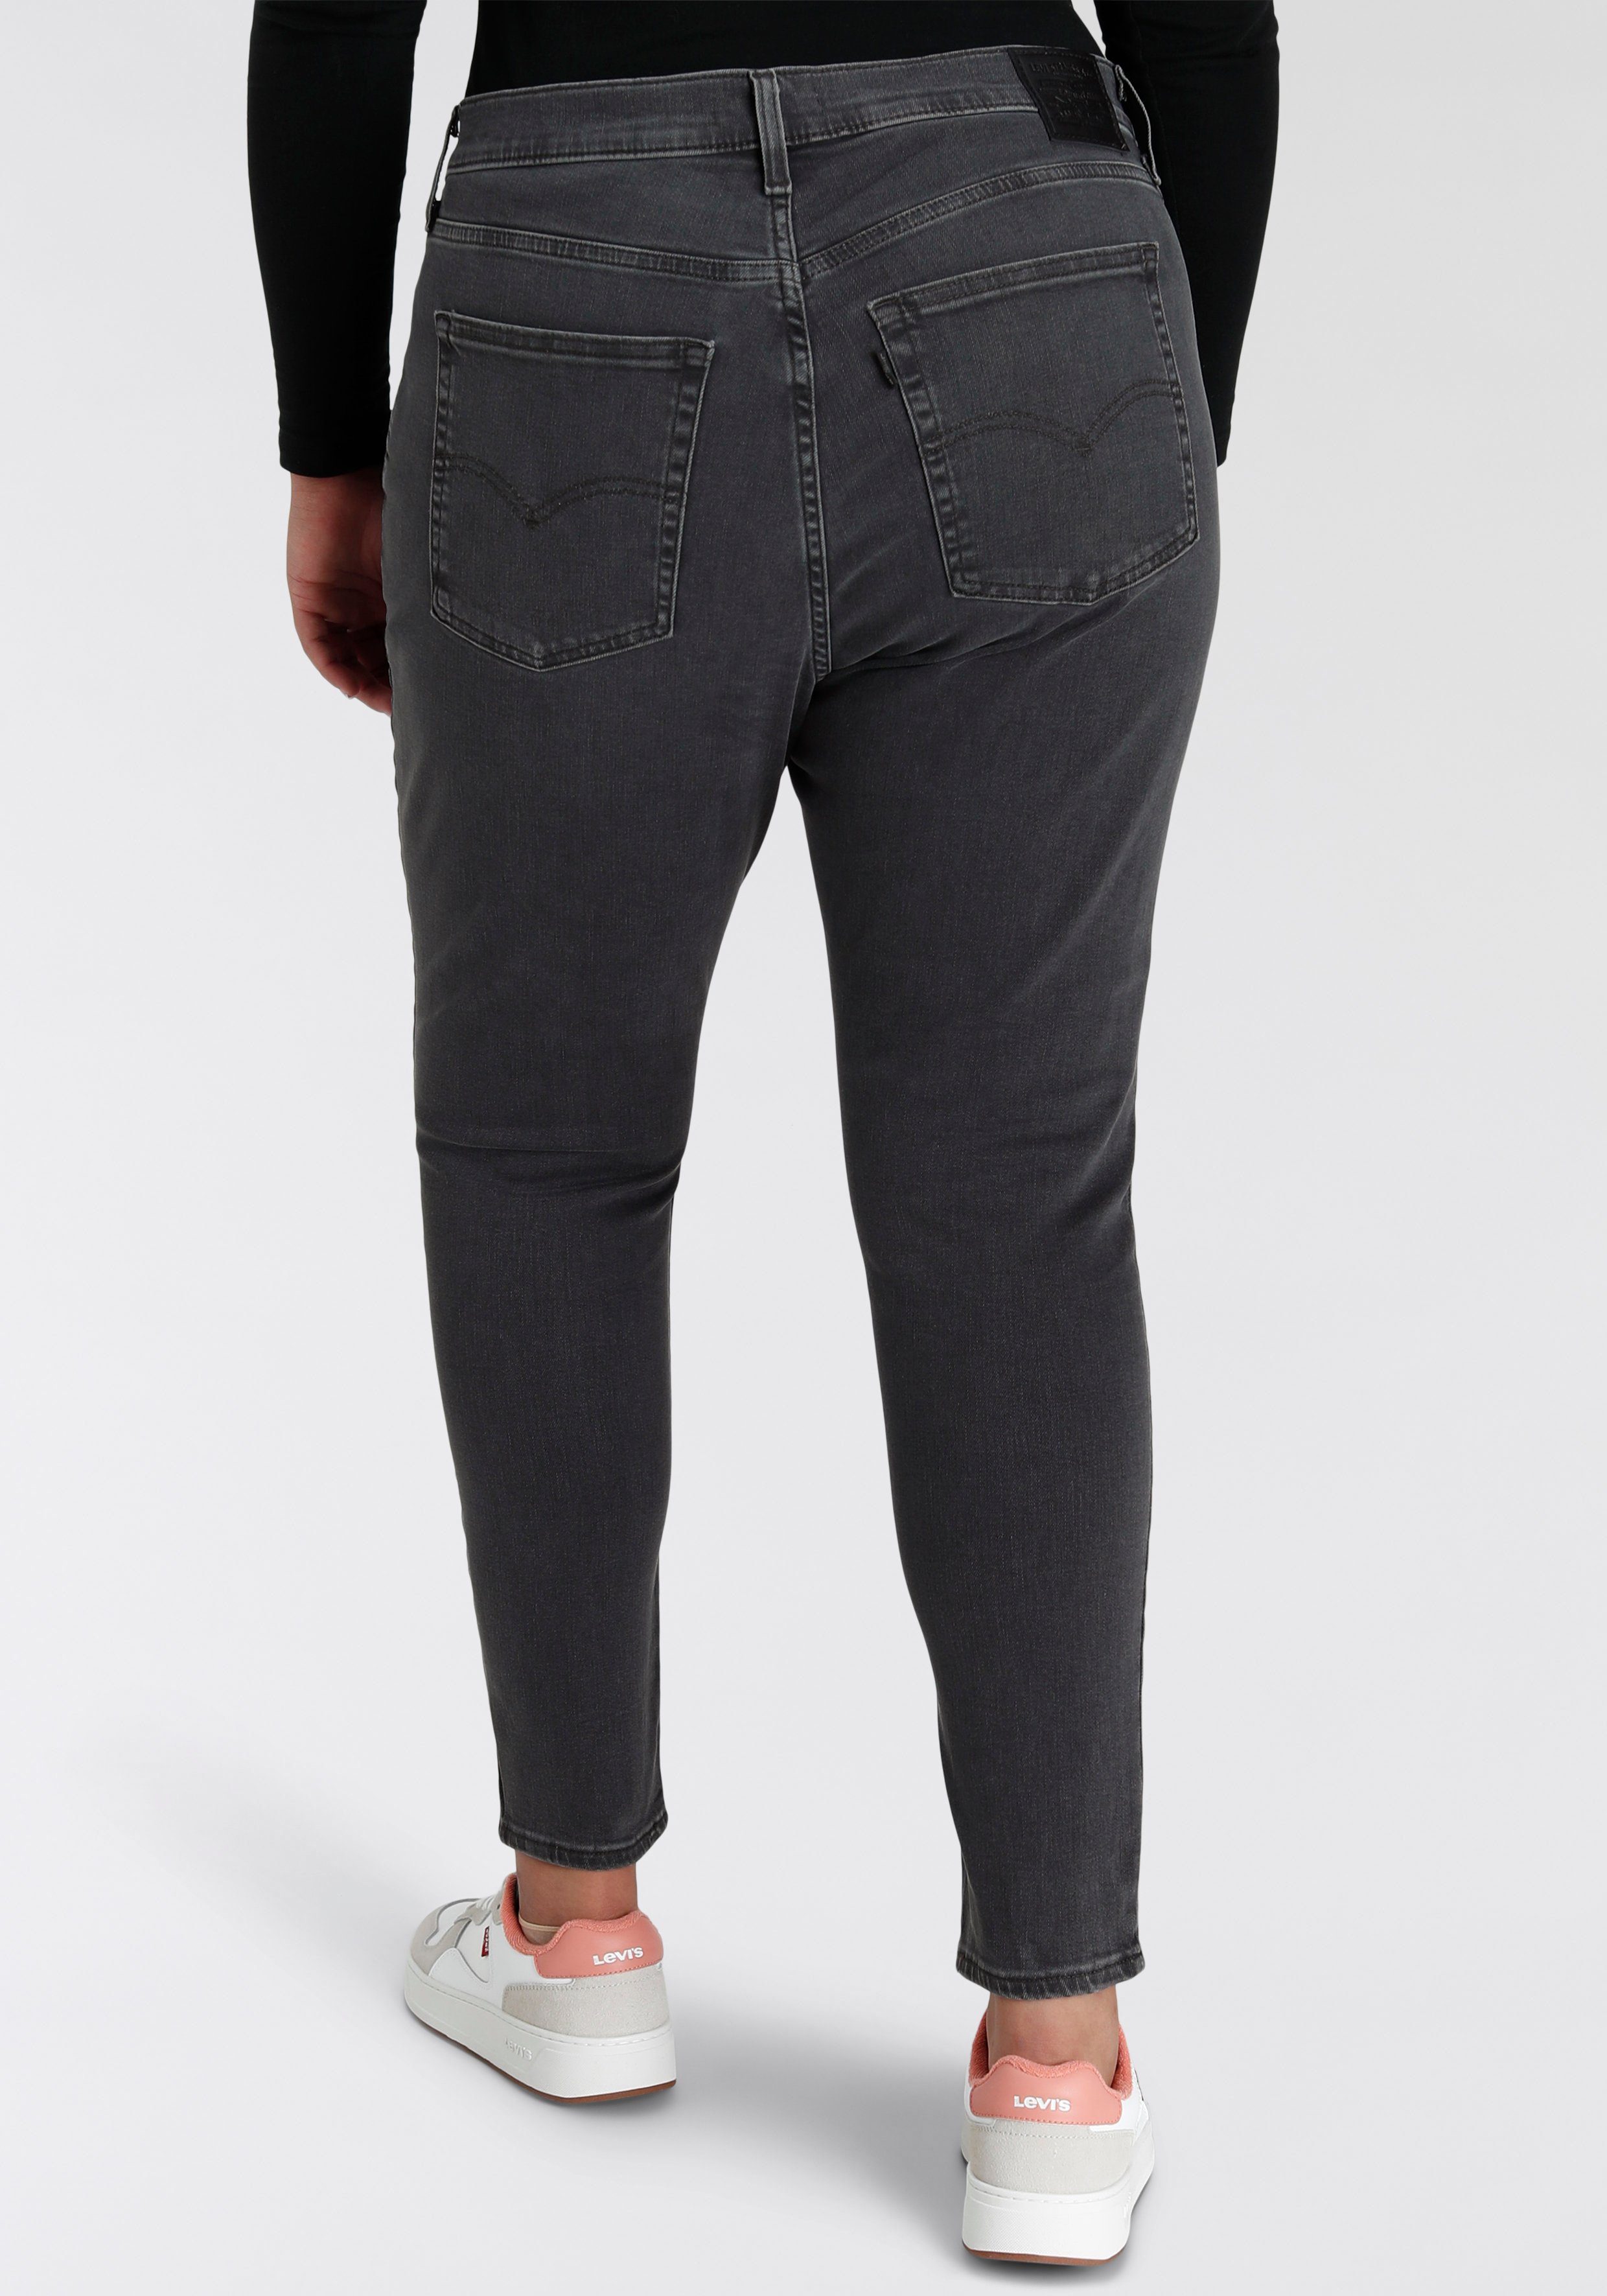 RISE 721 Plus black HI PL Levi's® Schnitt SKINNY sehr figurbetonter Skinny-fit-Jeans